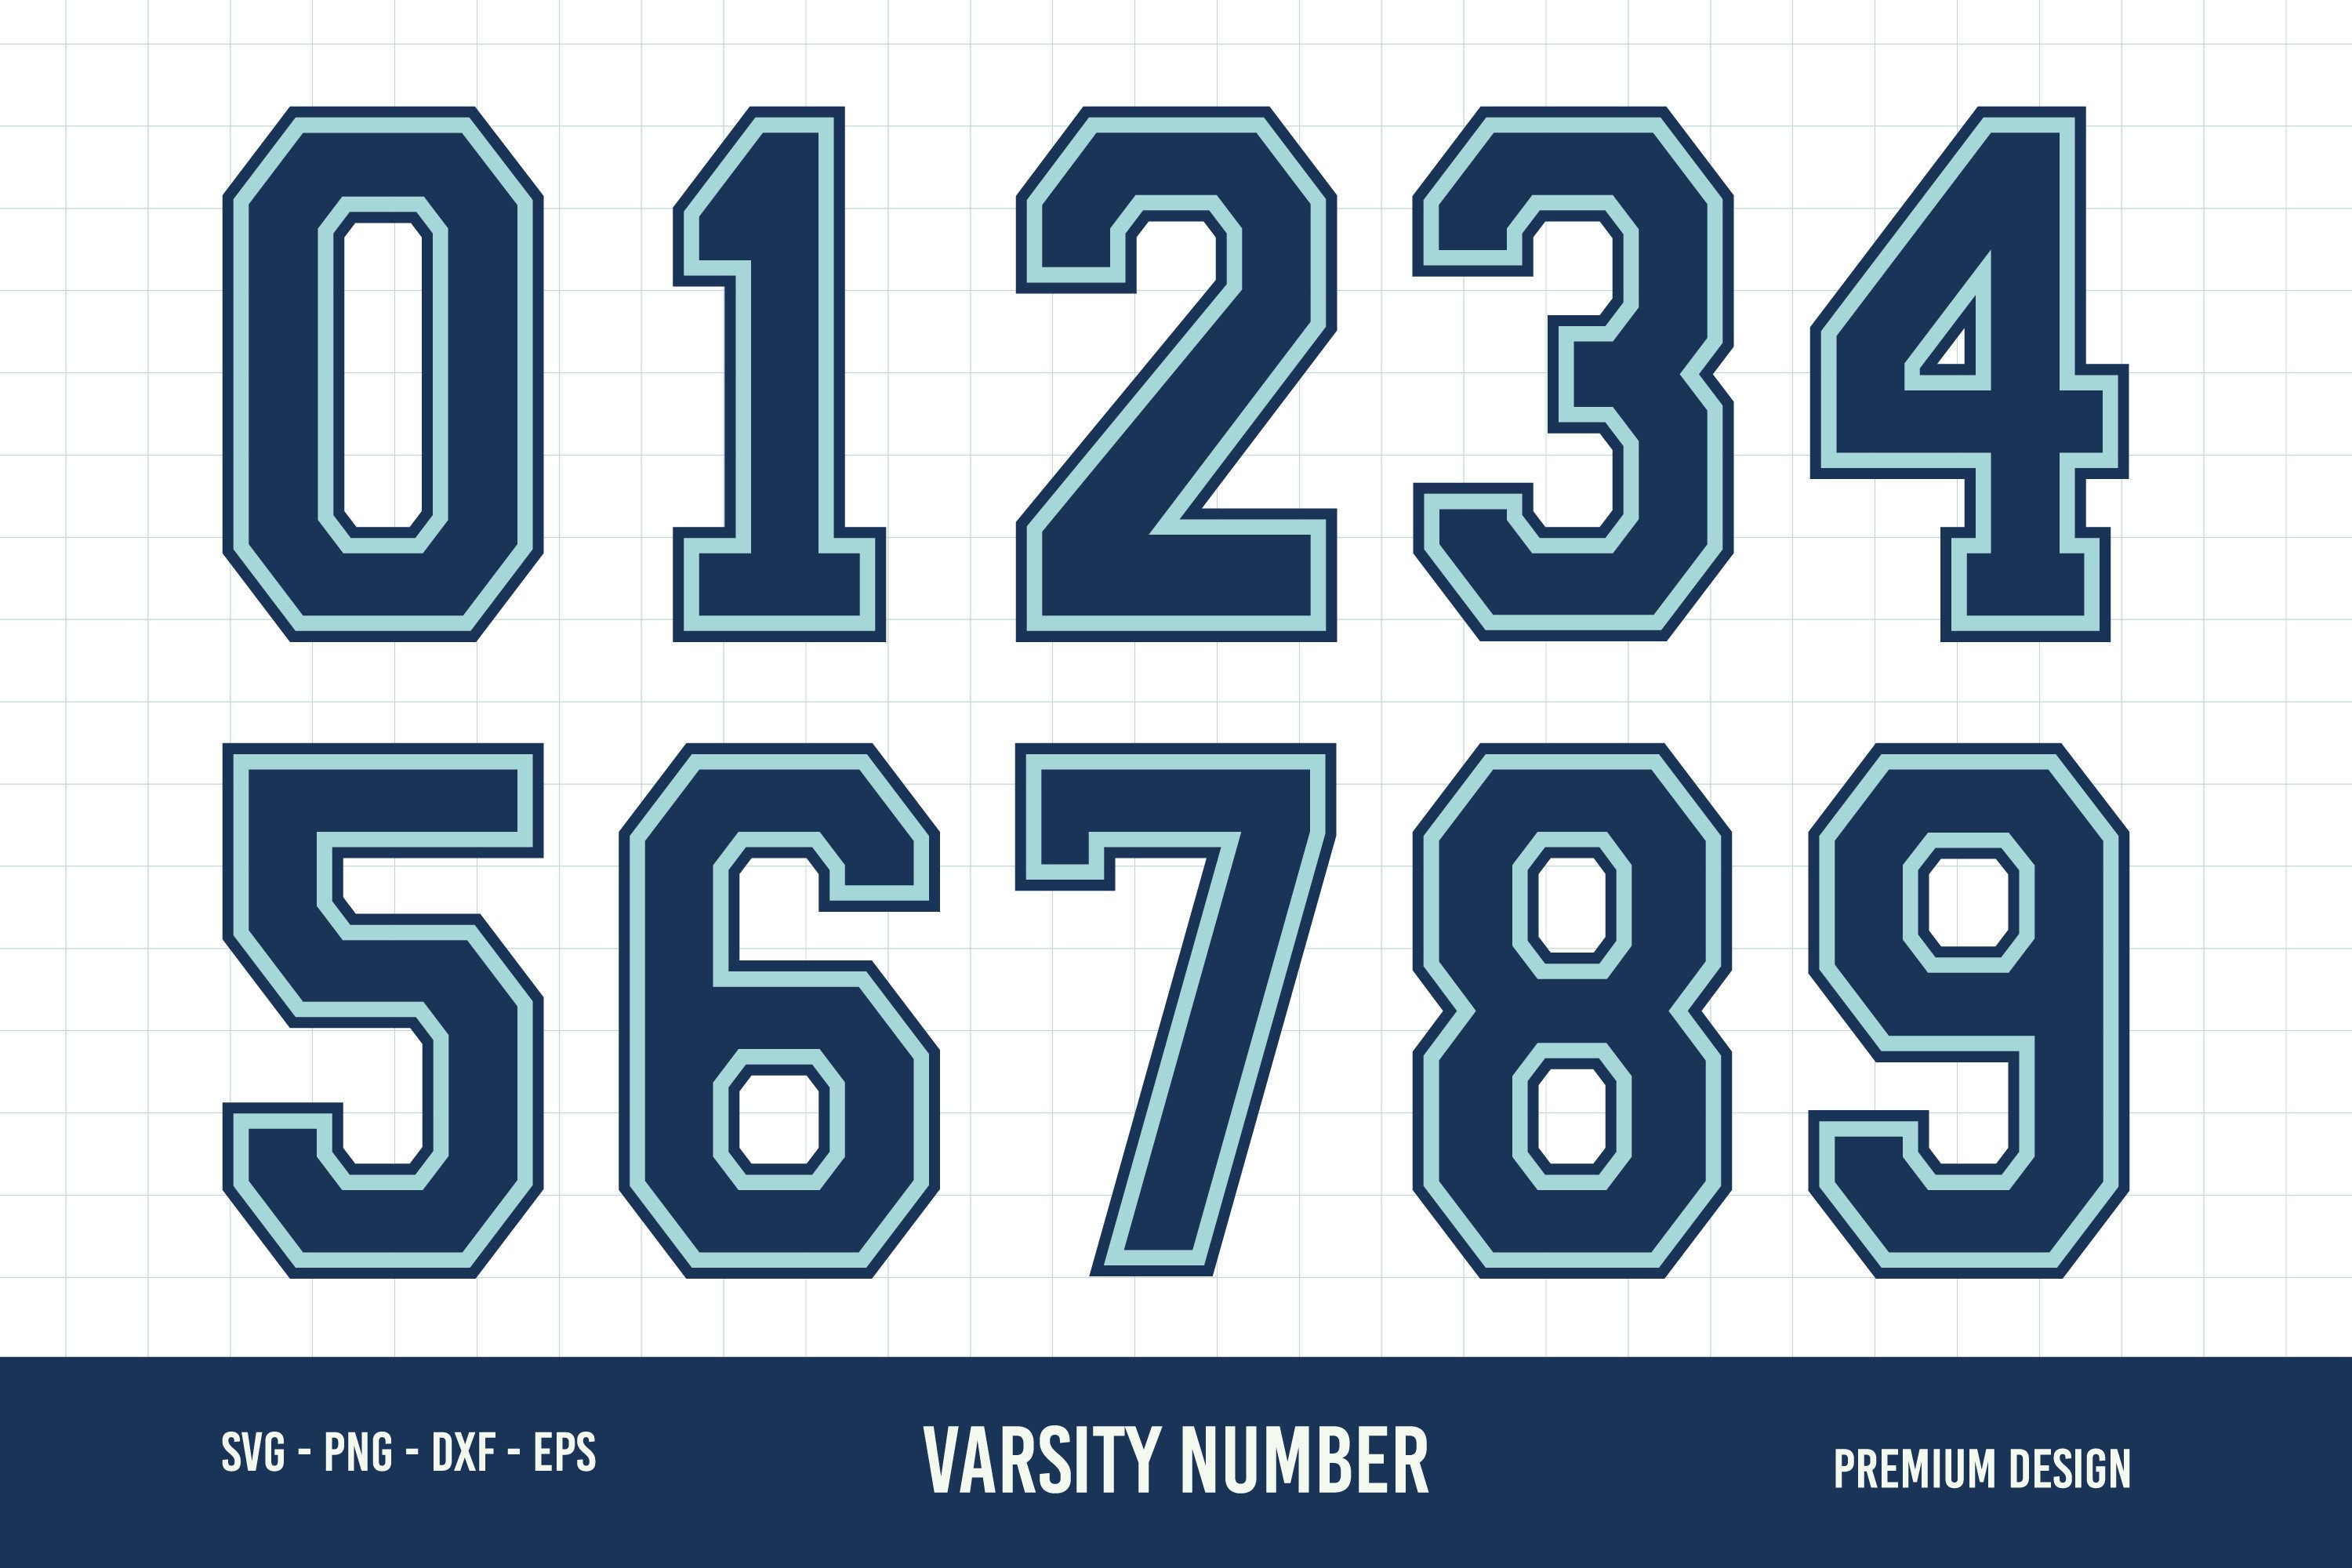 Varsity Numbers Svg Cut File Graphic By Twentysixdepressed · Creative